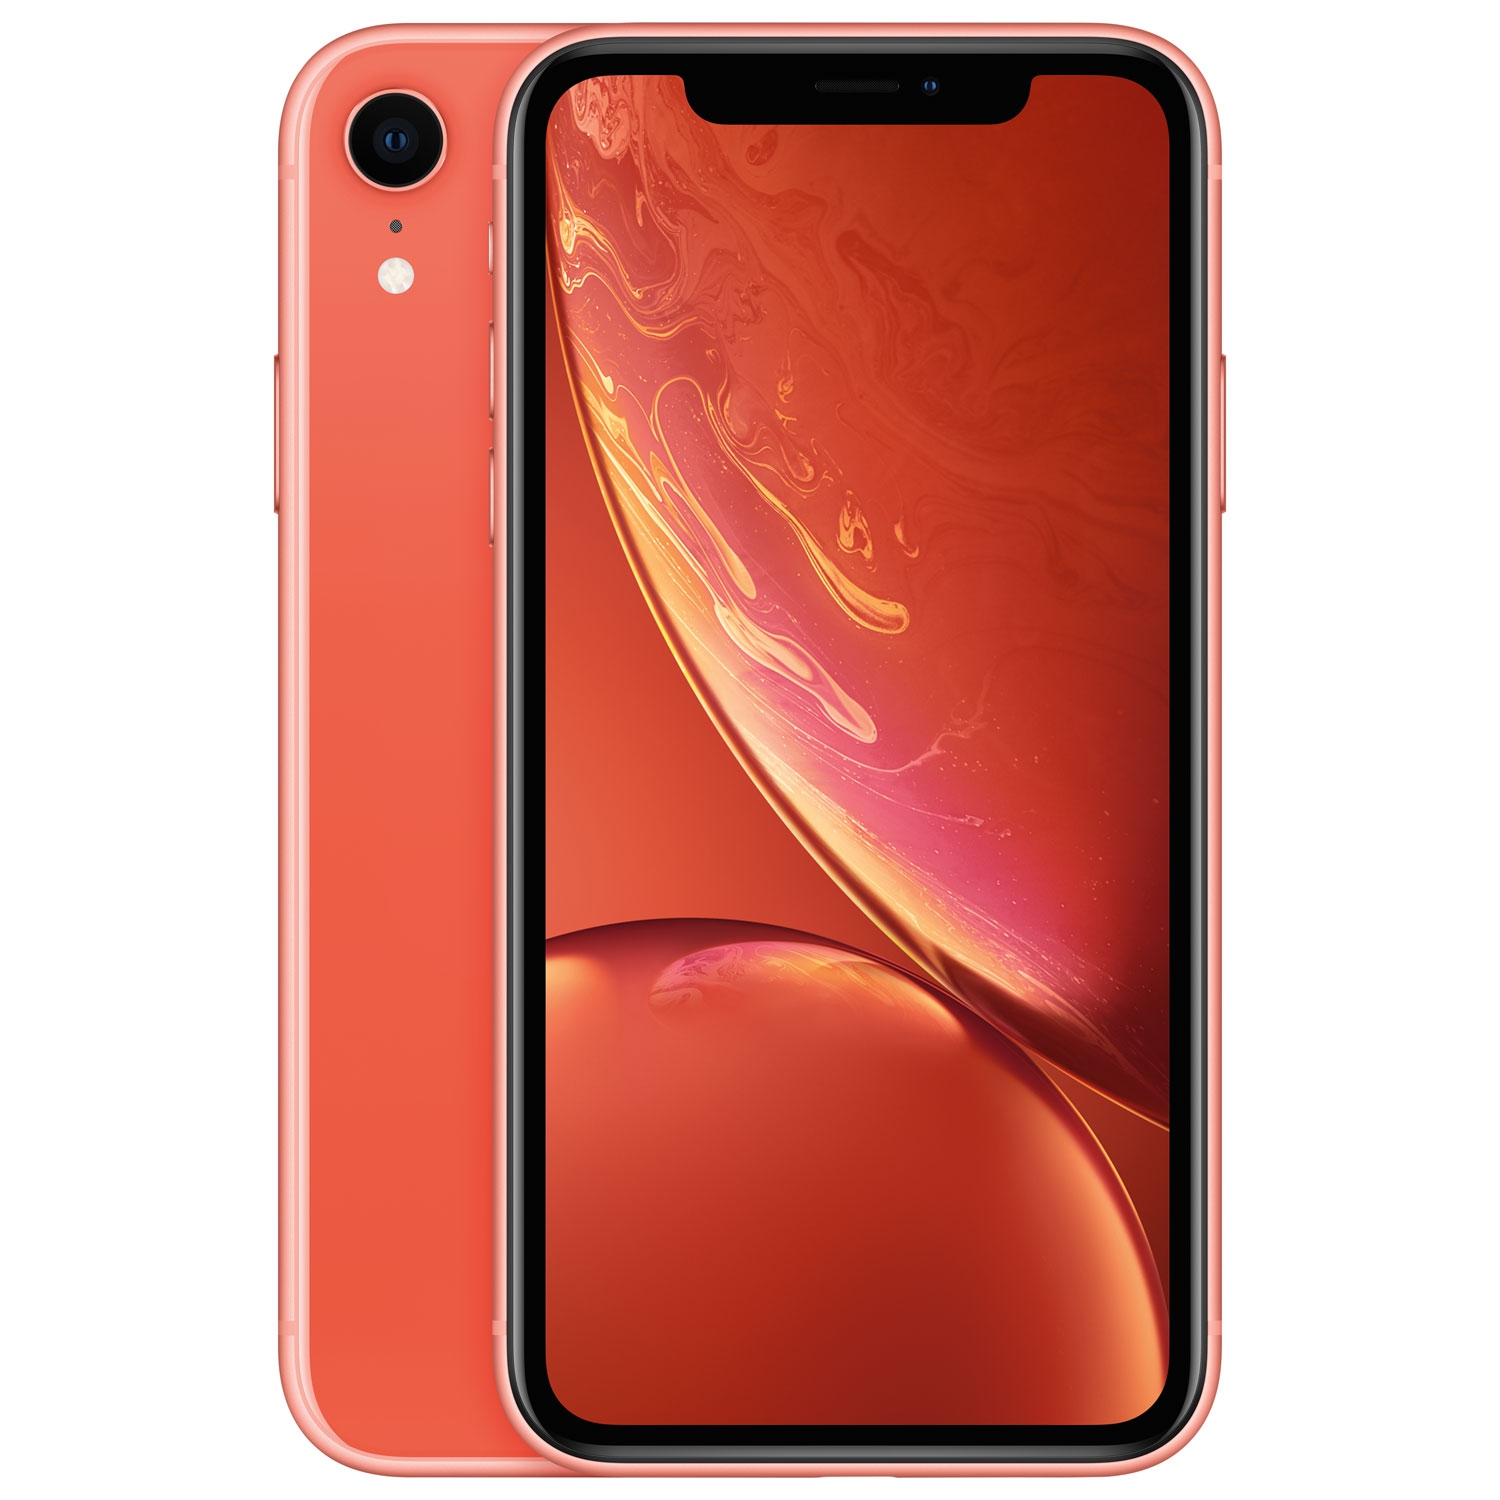 Refurbished (Excellent) - Apple iPhone XR 64GB Smartphone - Coral - Unlocked - Certified Refurbished